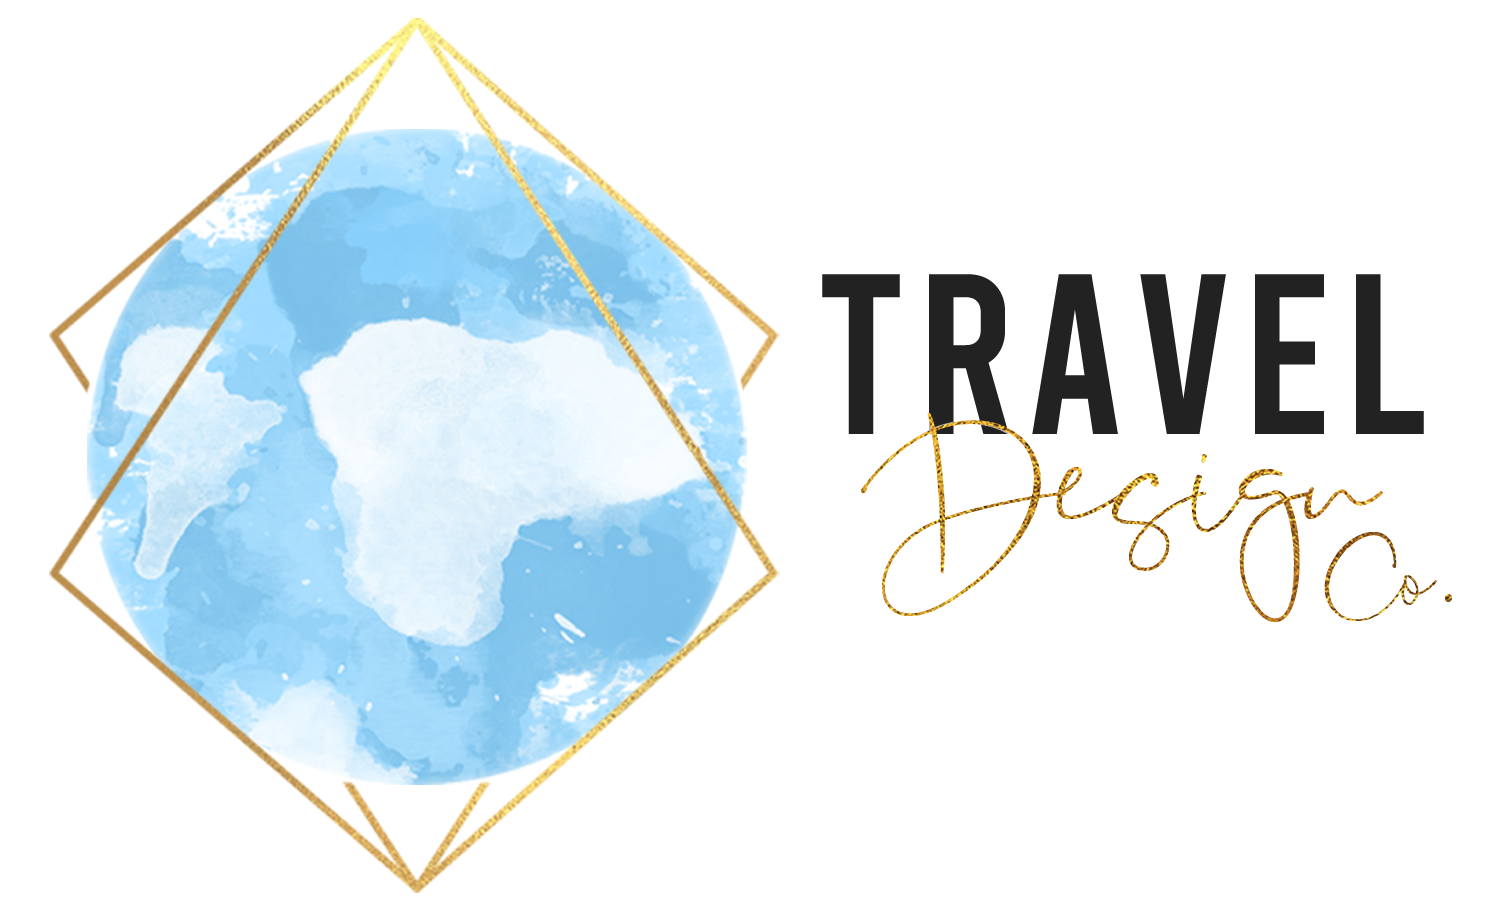 Travel Design Co. Logo